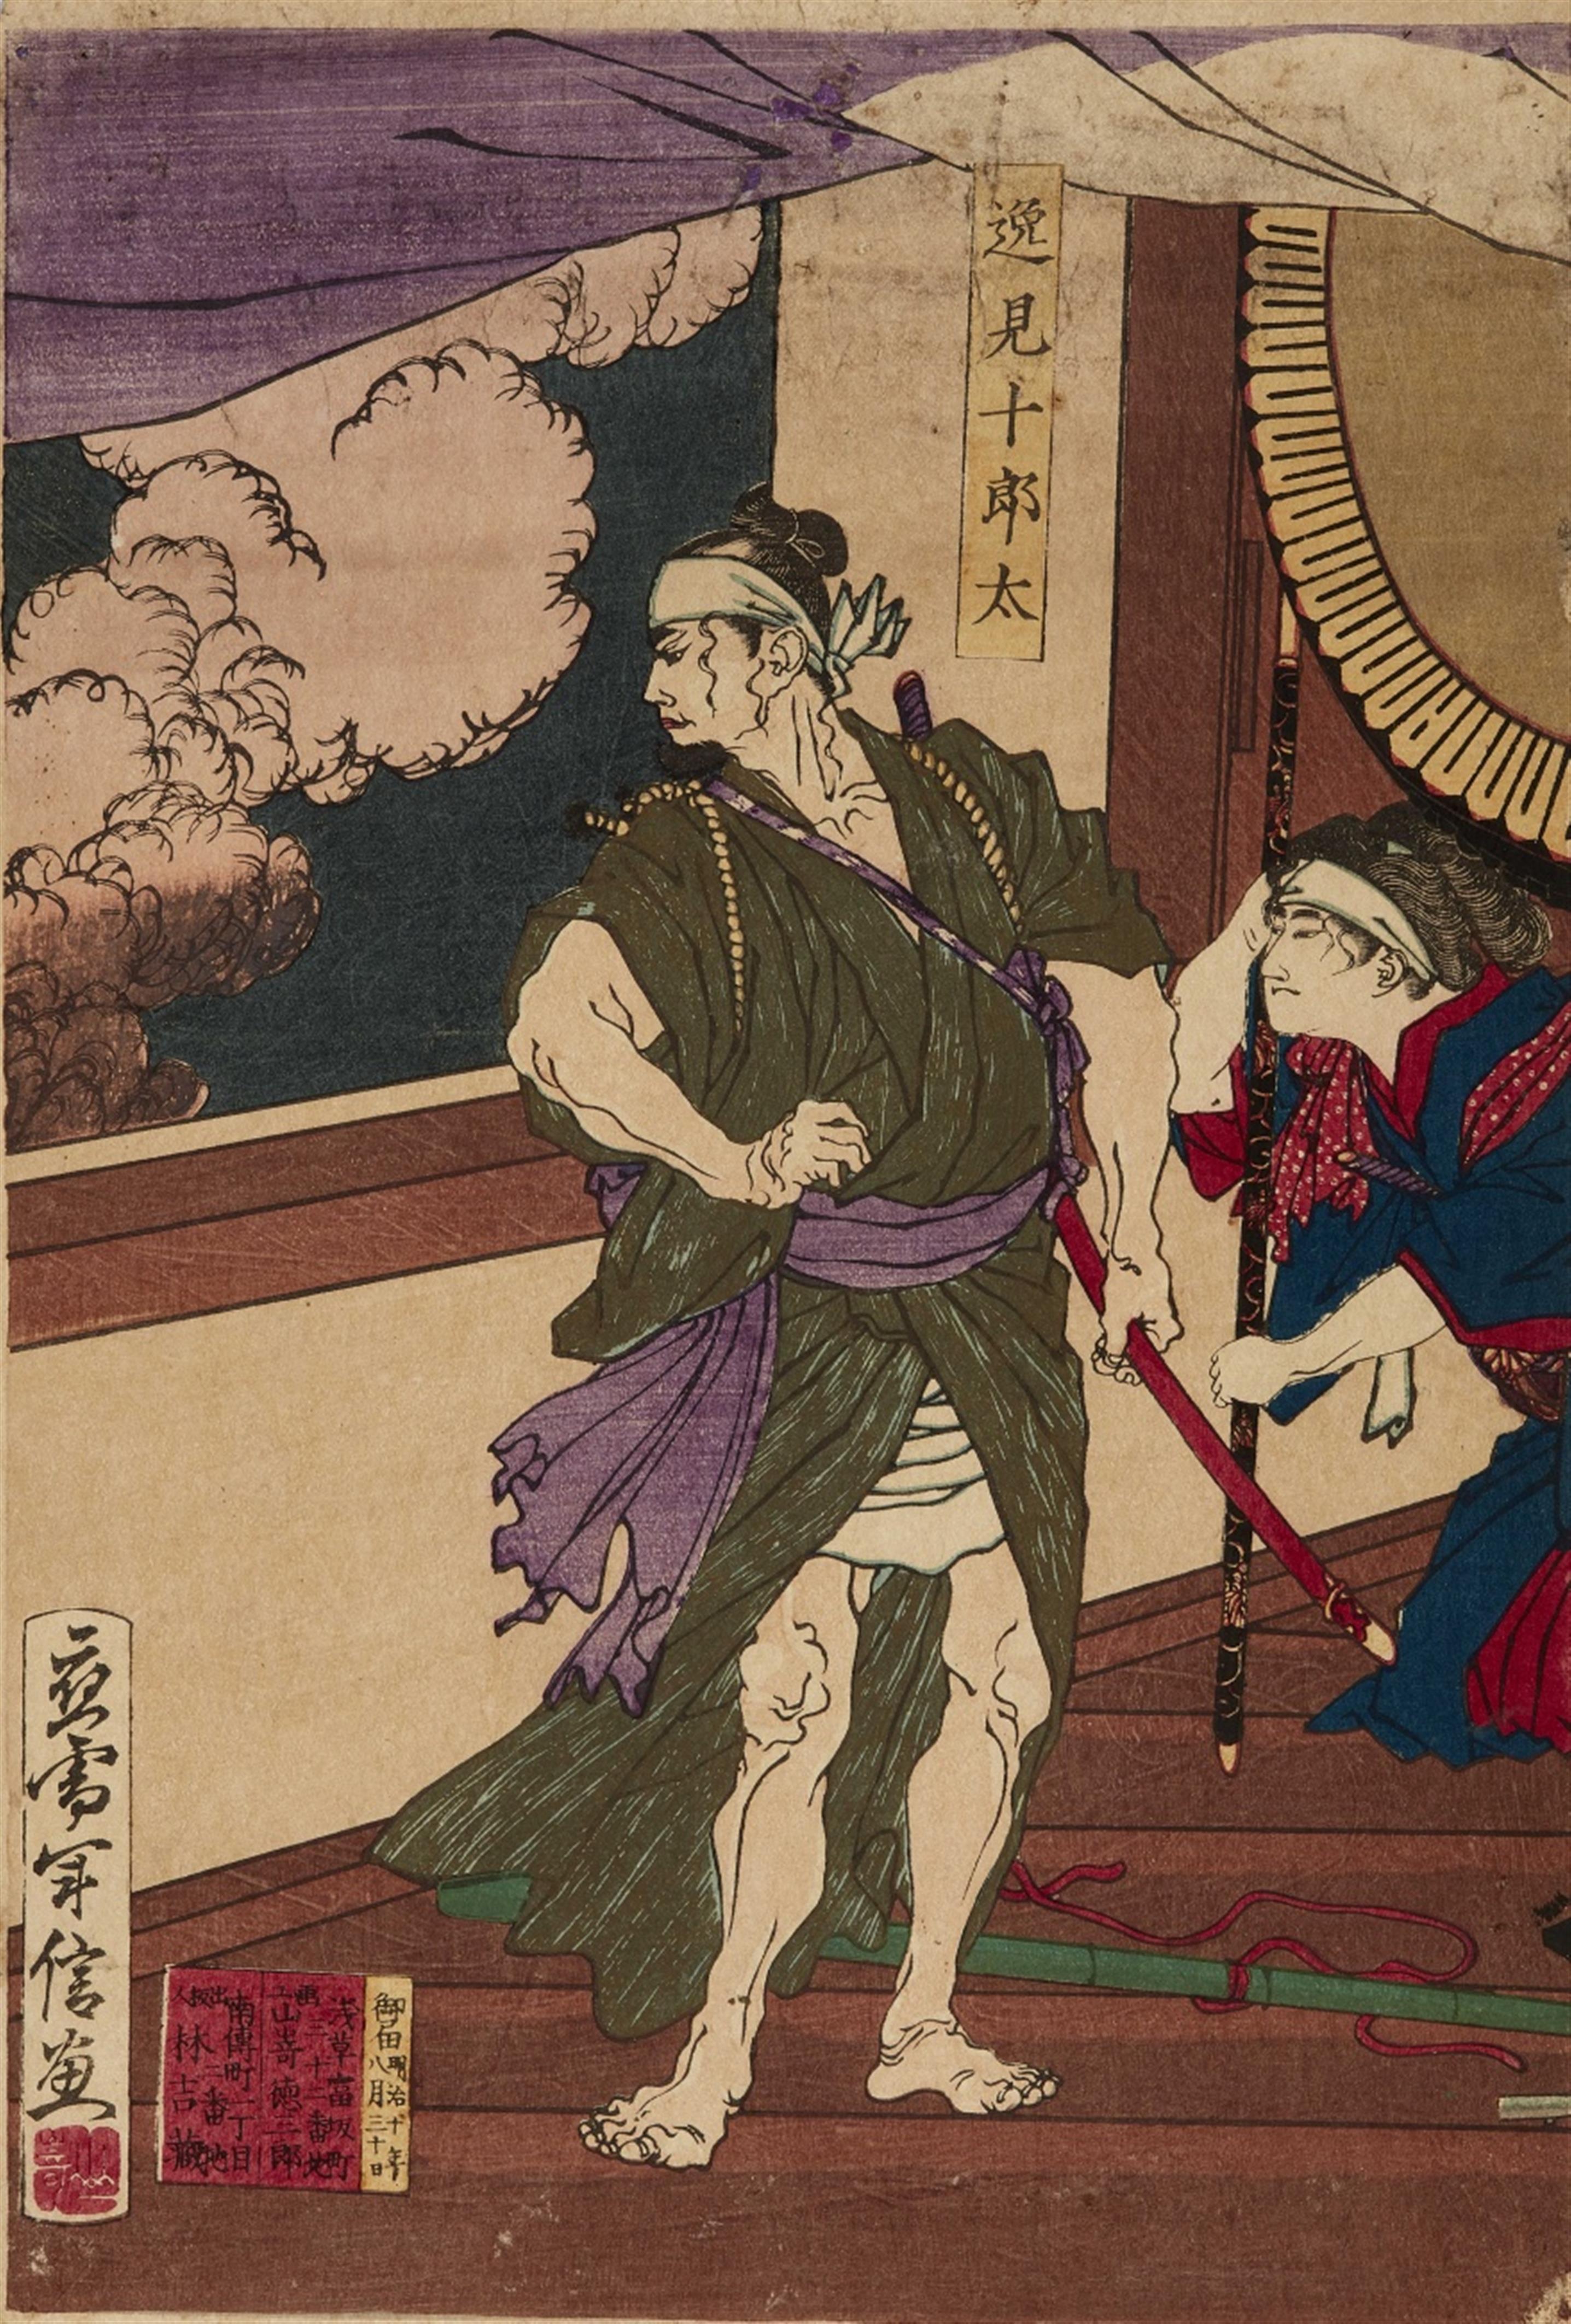 Various artists of the Meiji era - image-5